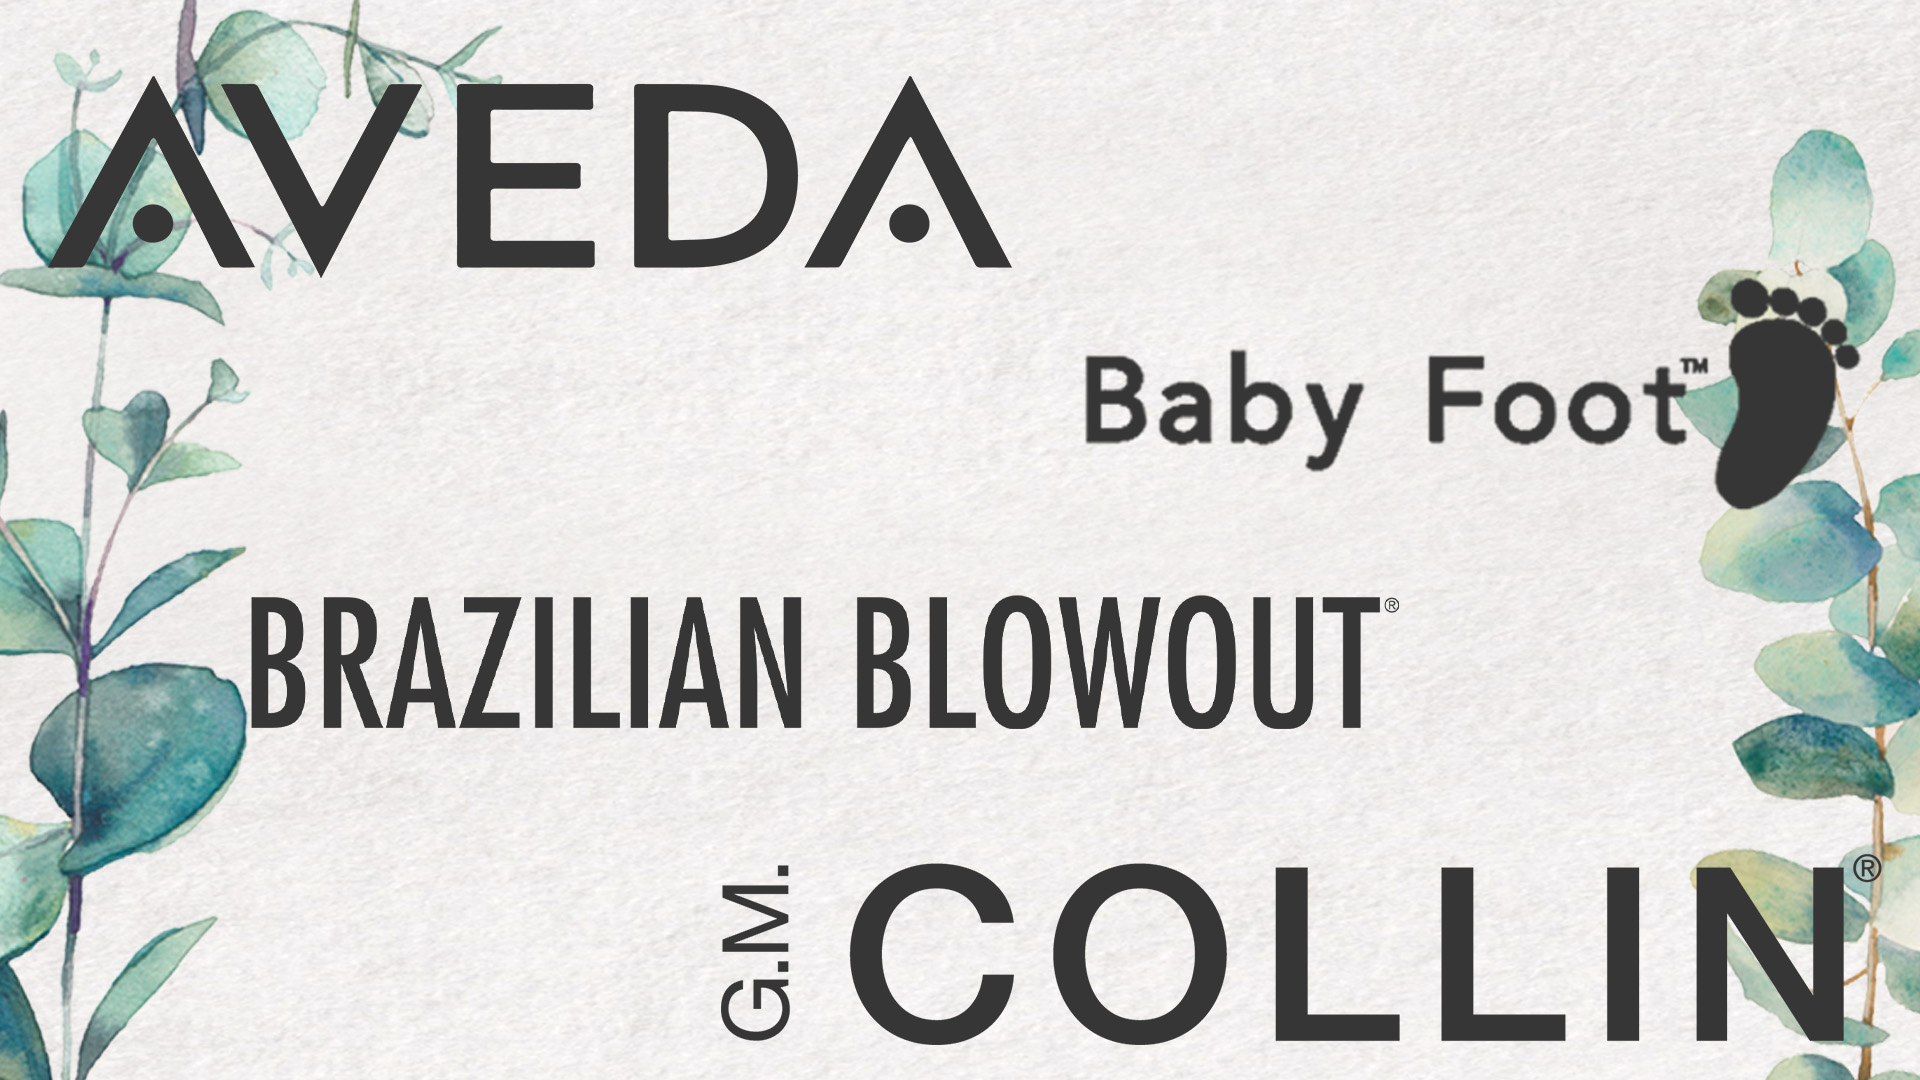 AVEDA. Baby Foot. Brazilian Blowout. G.M. Collin.